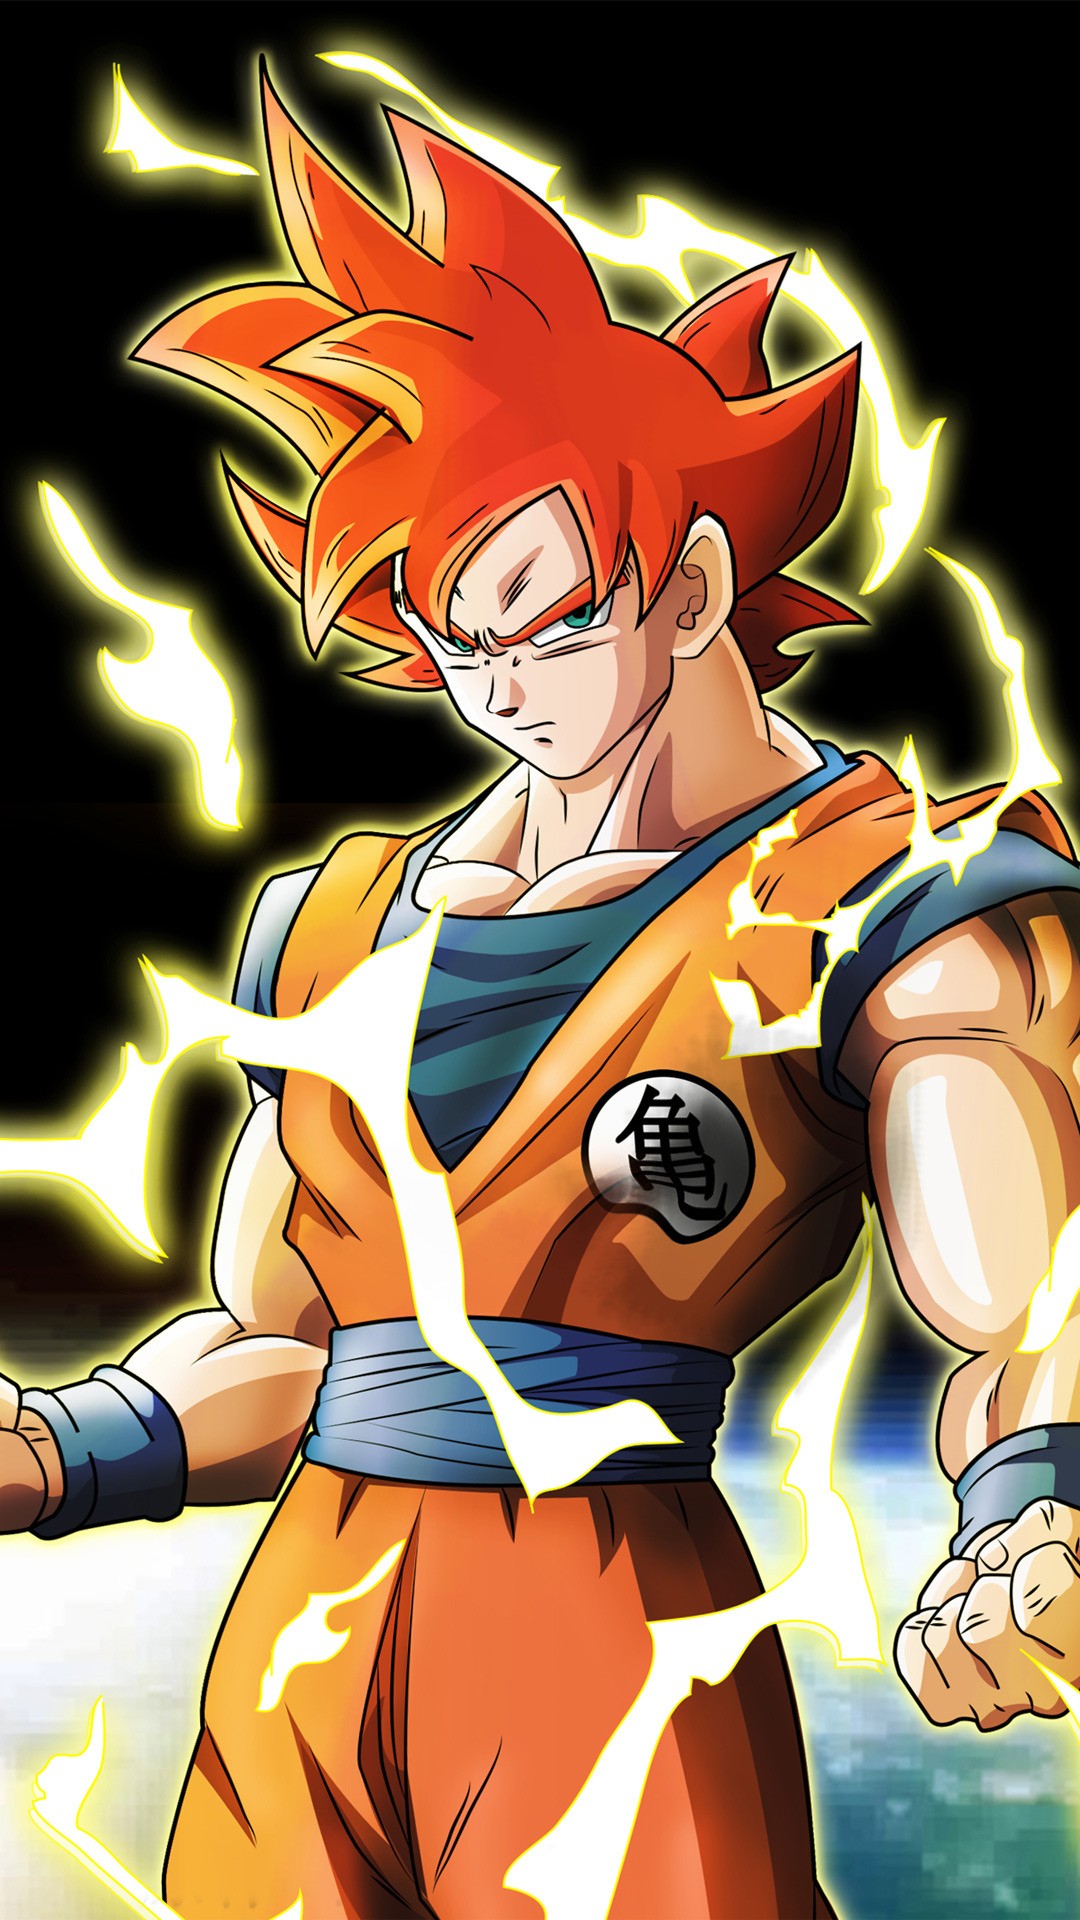 Goku Super Saiyan God HD Wallpapers For Android with HD resolution 1080x1920